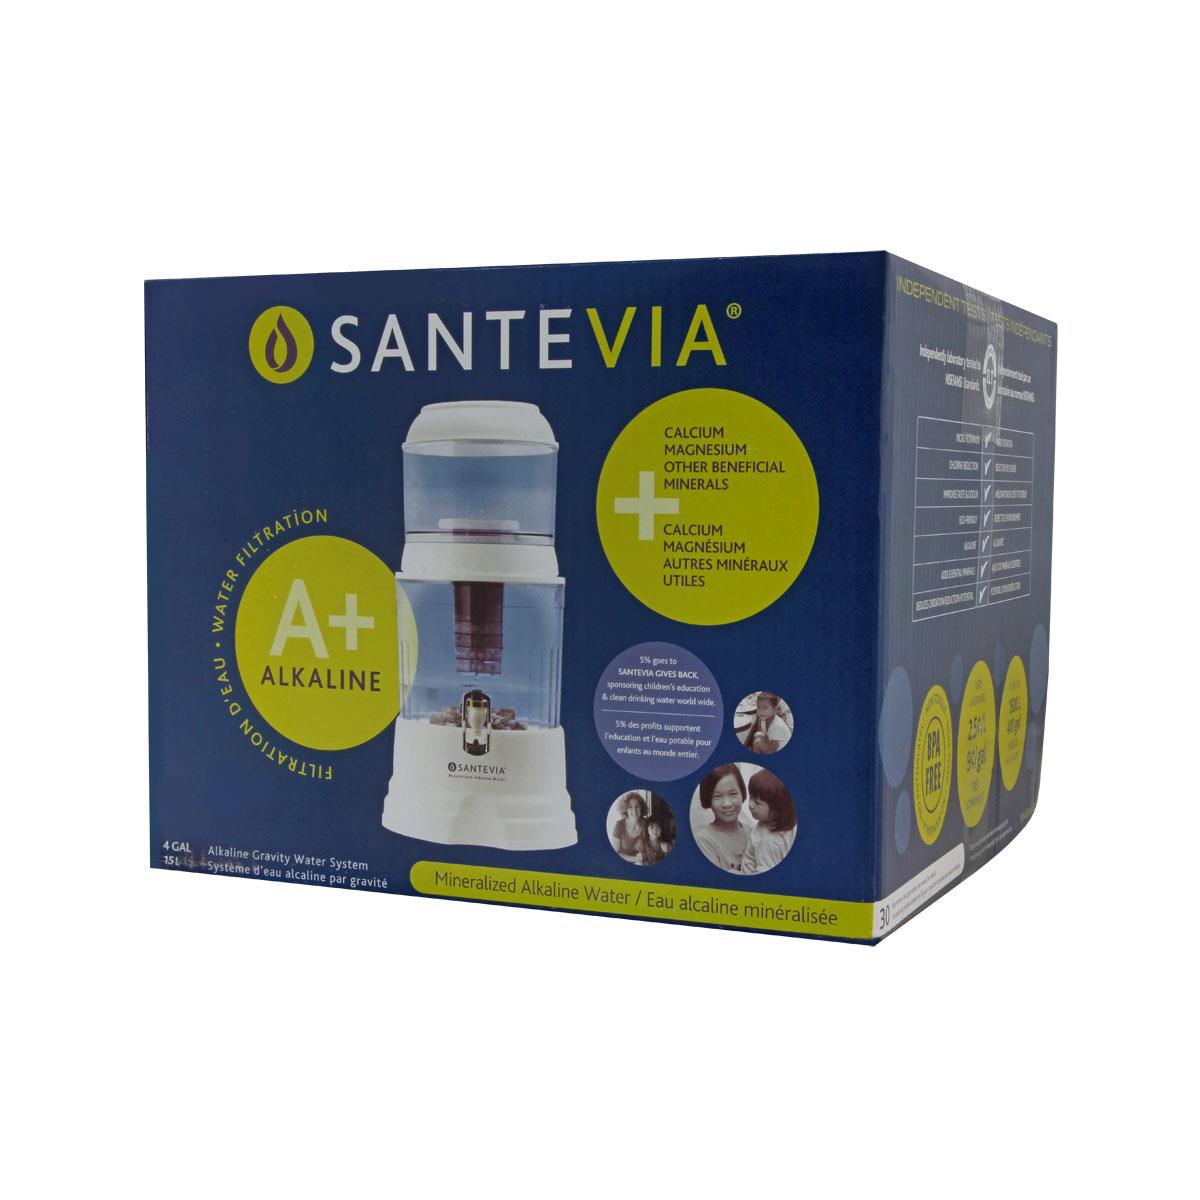 Santevia Gravity Filtration System - 15L Countertop Model Box